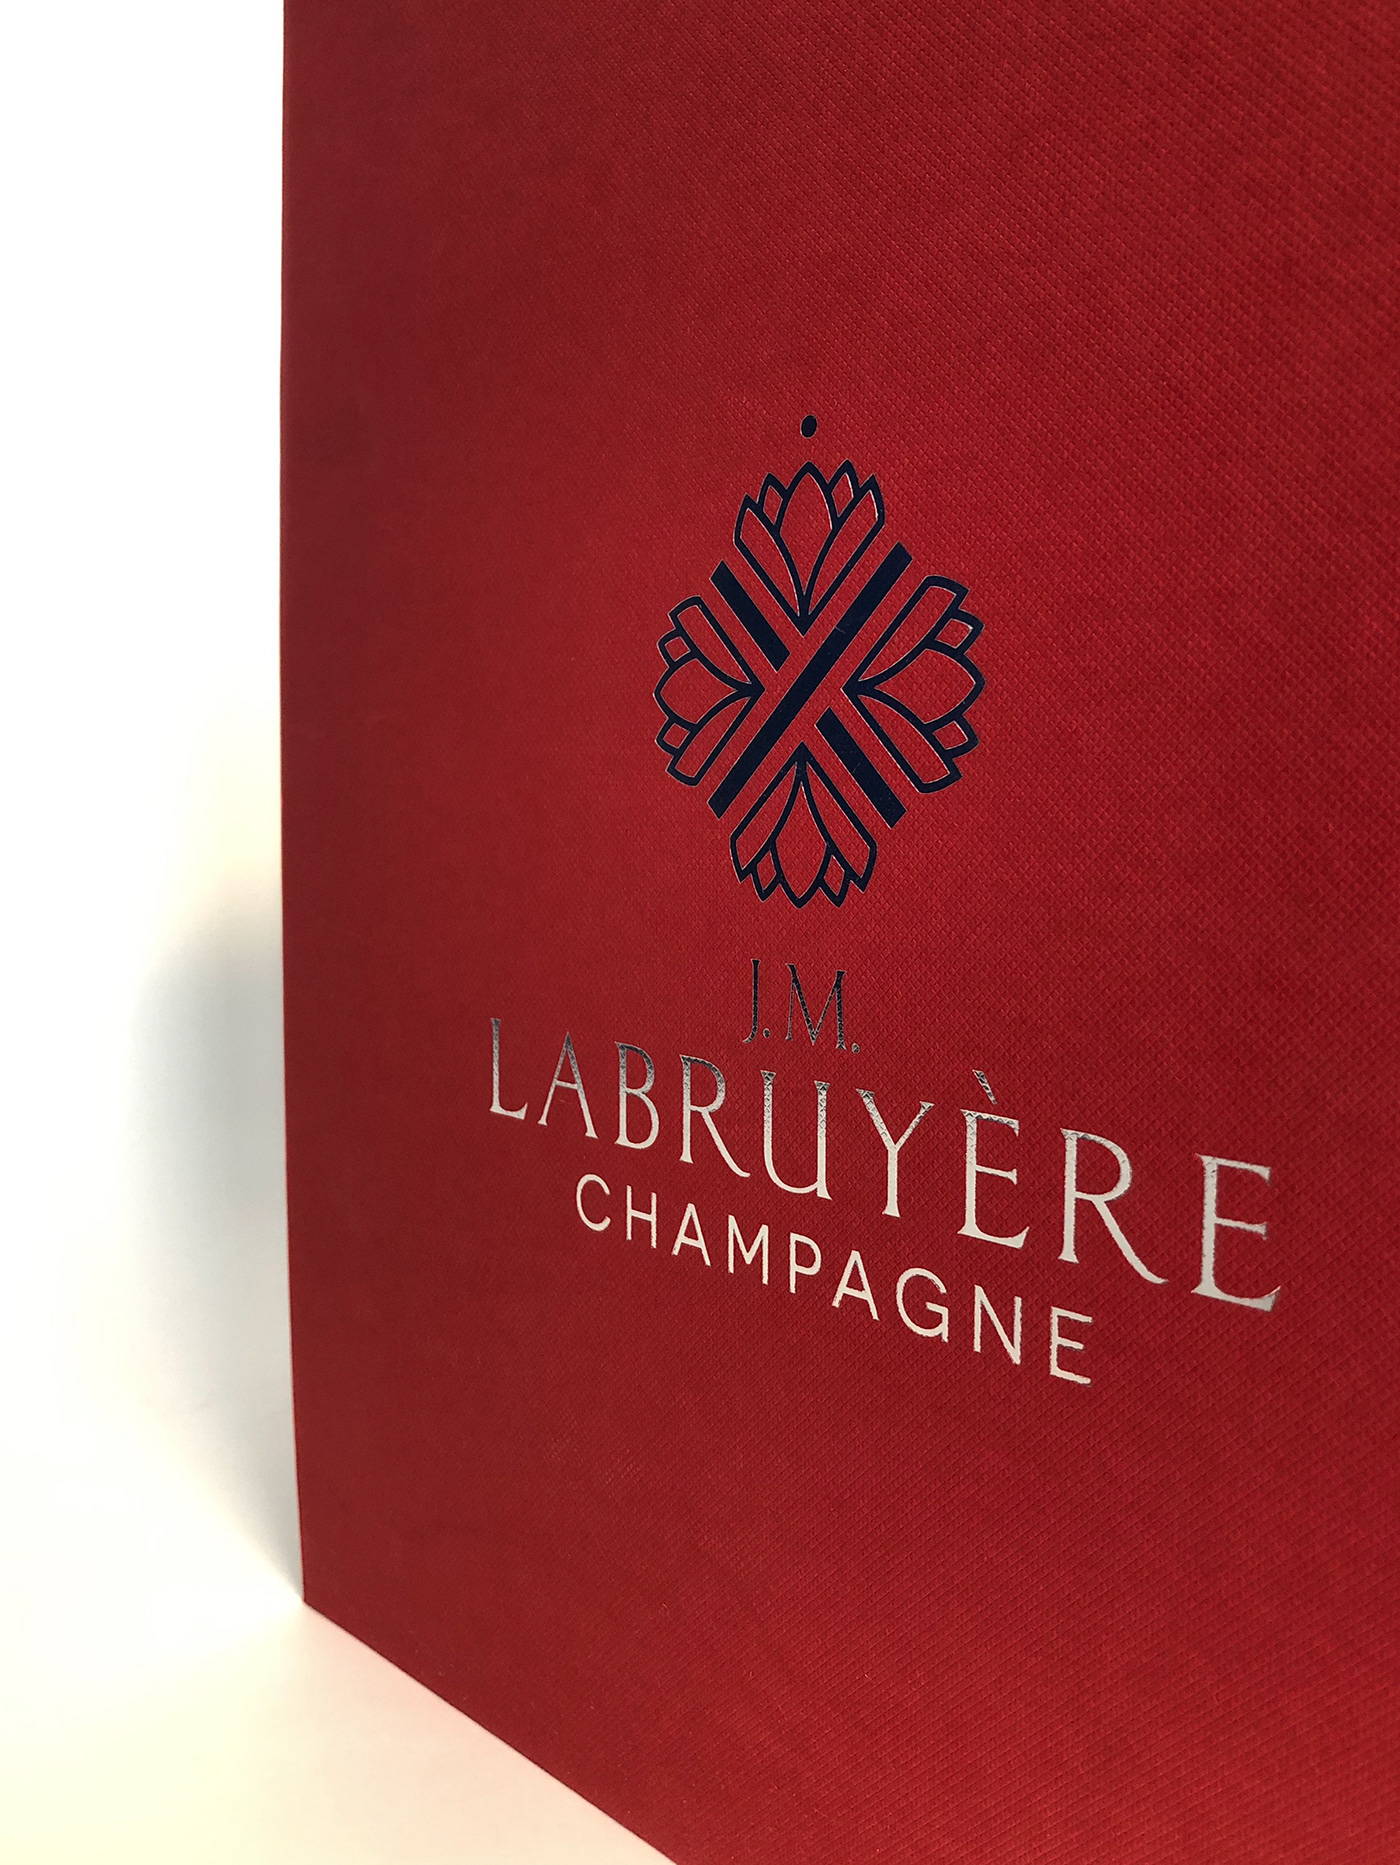 Board box design luxury Packaging paper stamp